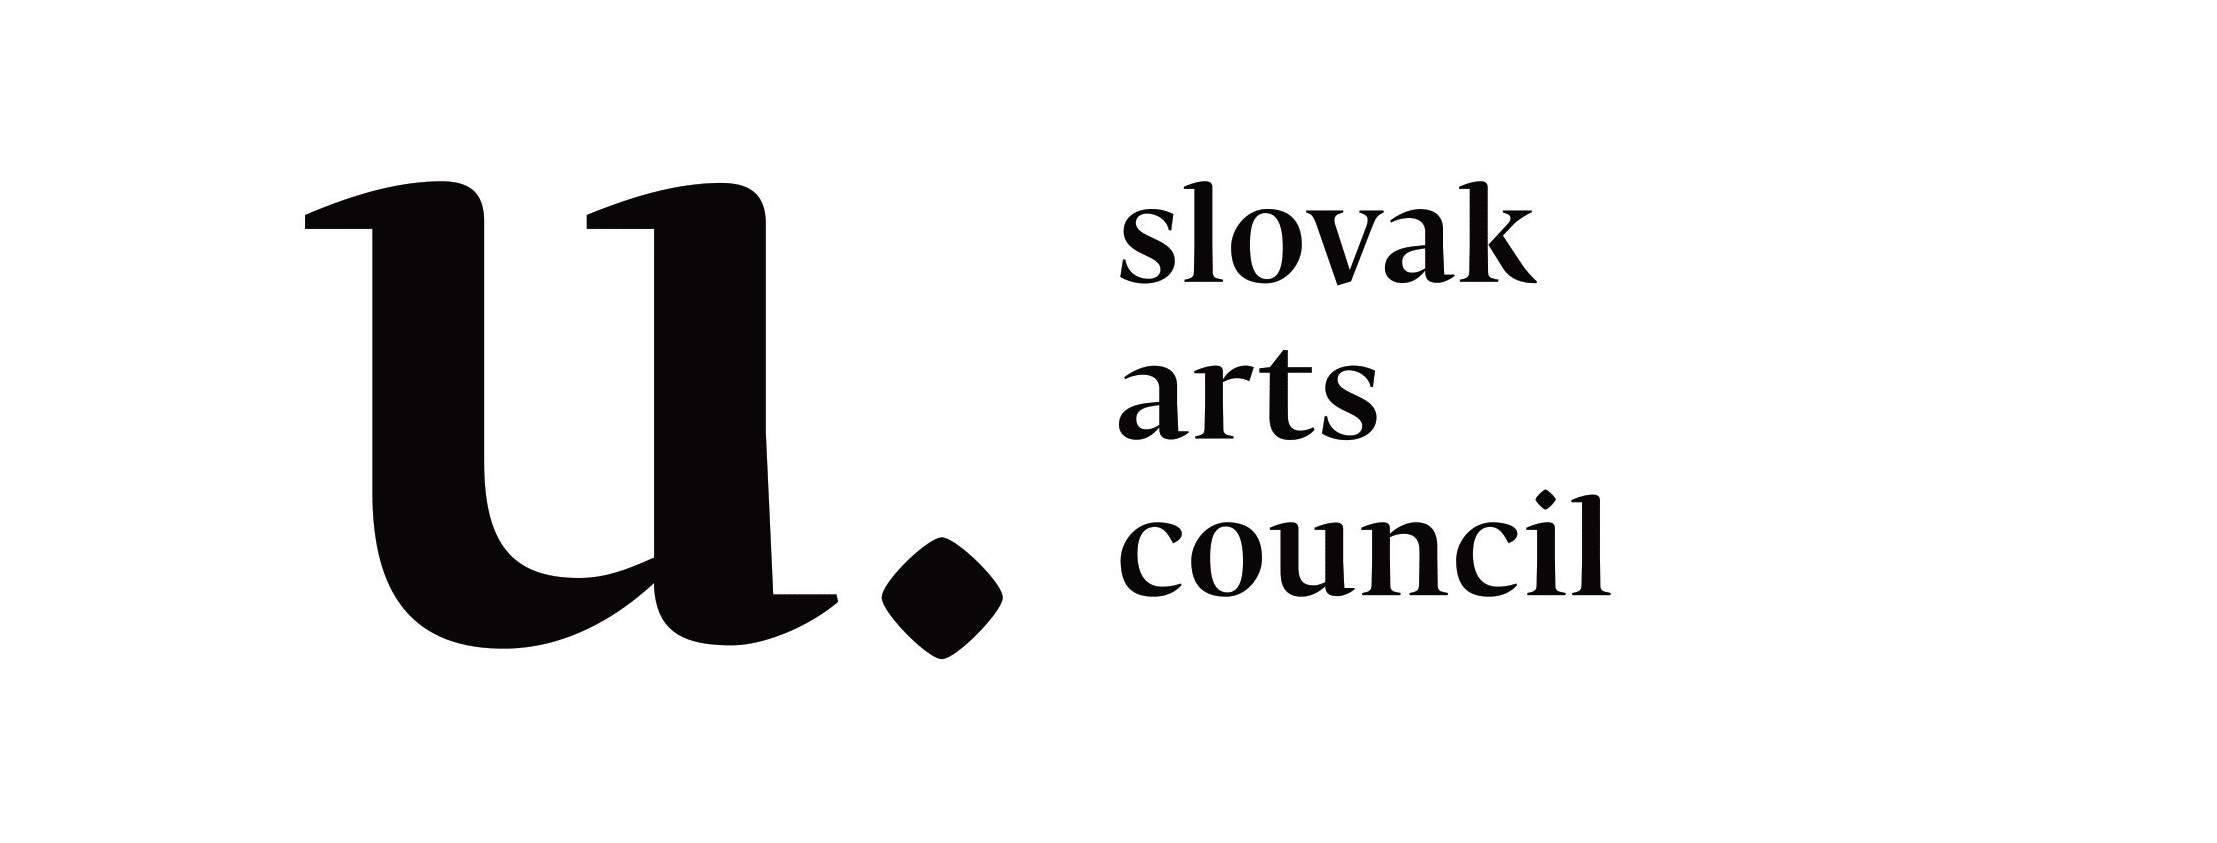 Slovak Arts Council logo small